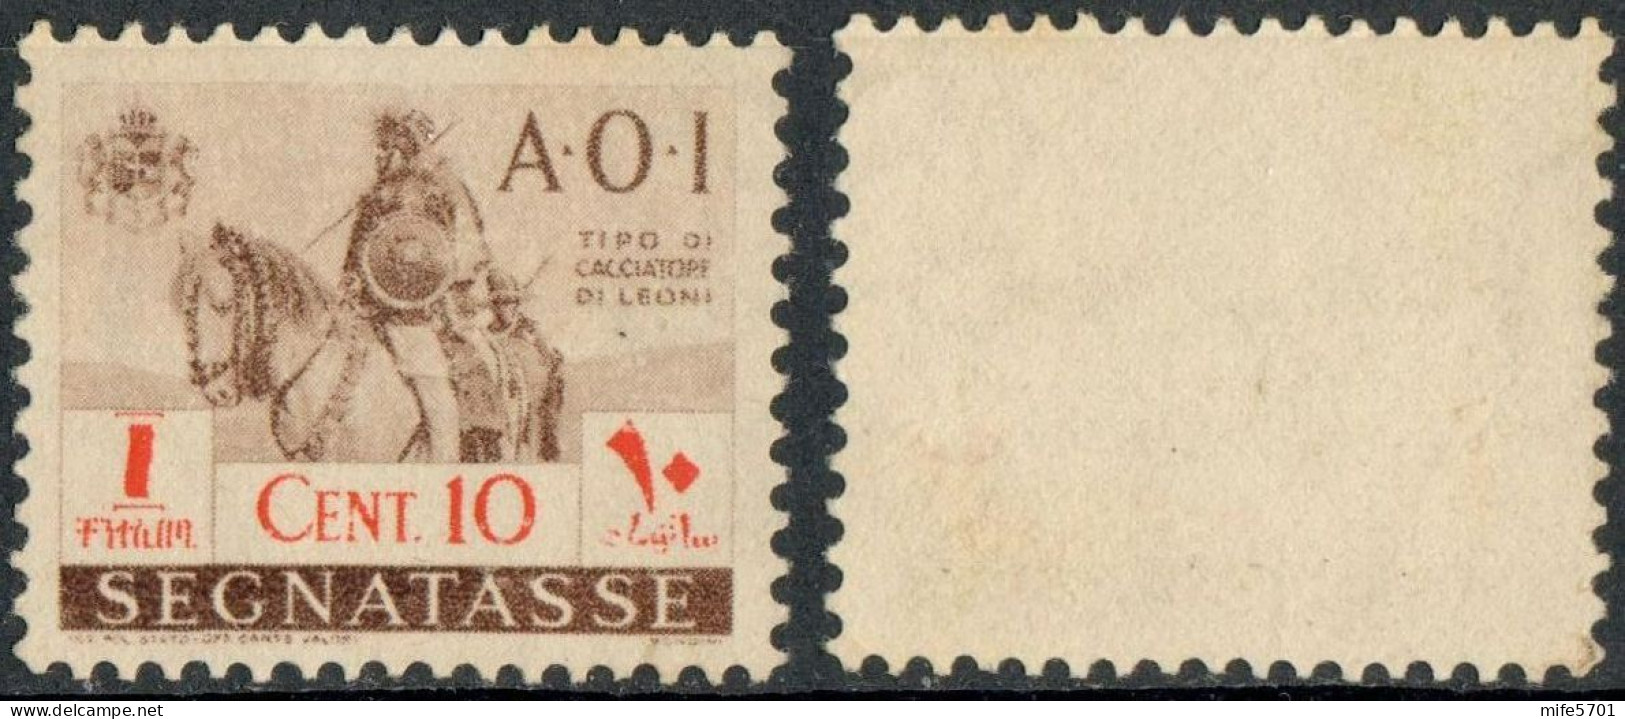 REGNO AFRICA ORIENTALE ITALIANA 1941 A.O.I. SEGNATASSE 'CACCIATORE DI LEONI A CAVALLO' C. 10 SENZA GOMMA (*) SASSONE 11 - Italiaans Oost-Afrika